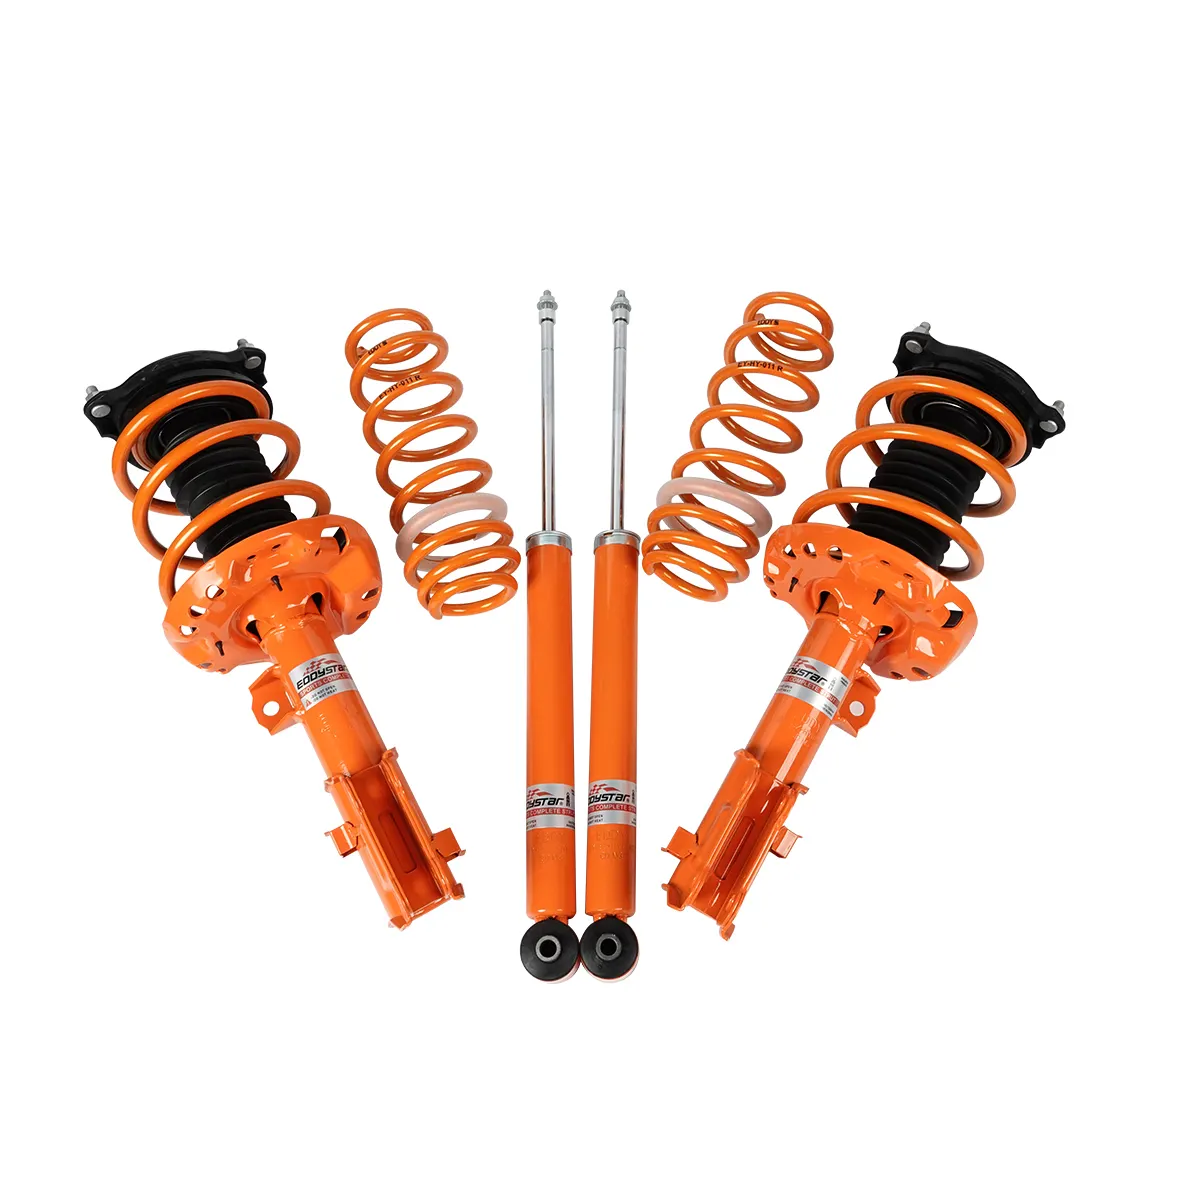 EDDY Professional New Design custom shock absorbers high strength suspension coilover kits for Hyundai Elantra